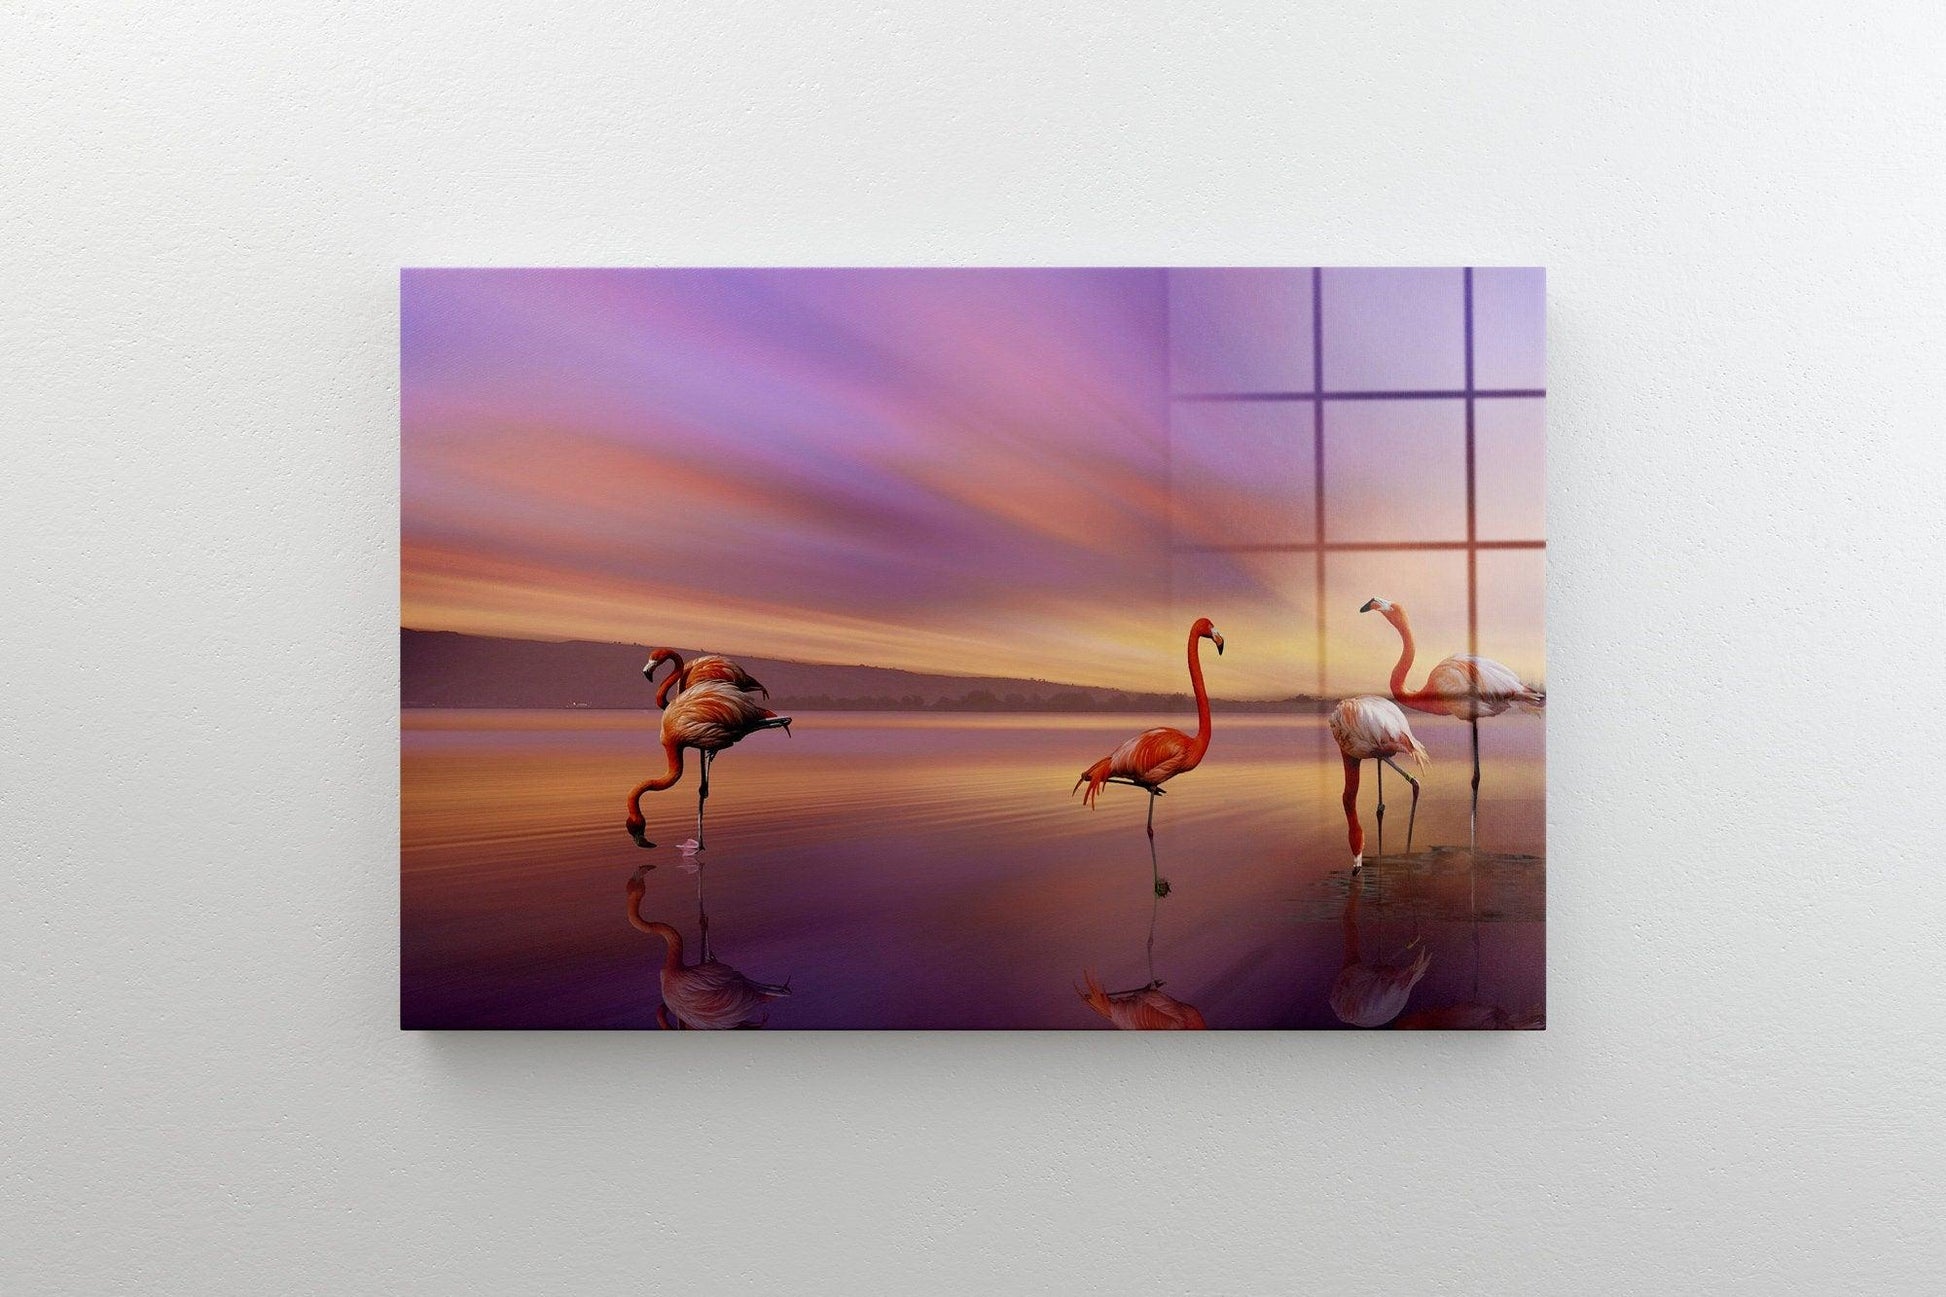 Flamingo glass wall art| Temper Glass Wall Art, Glass Painting Wall Art, UV Printed Glass Art, flamingo glass wall decor, animal wall decor